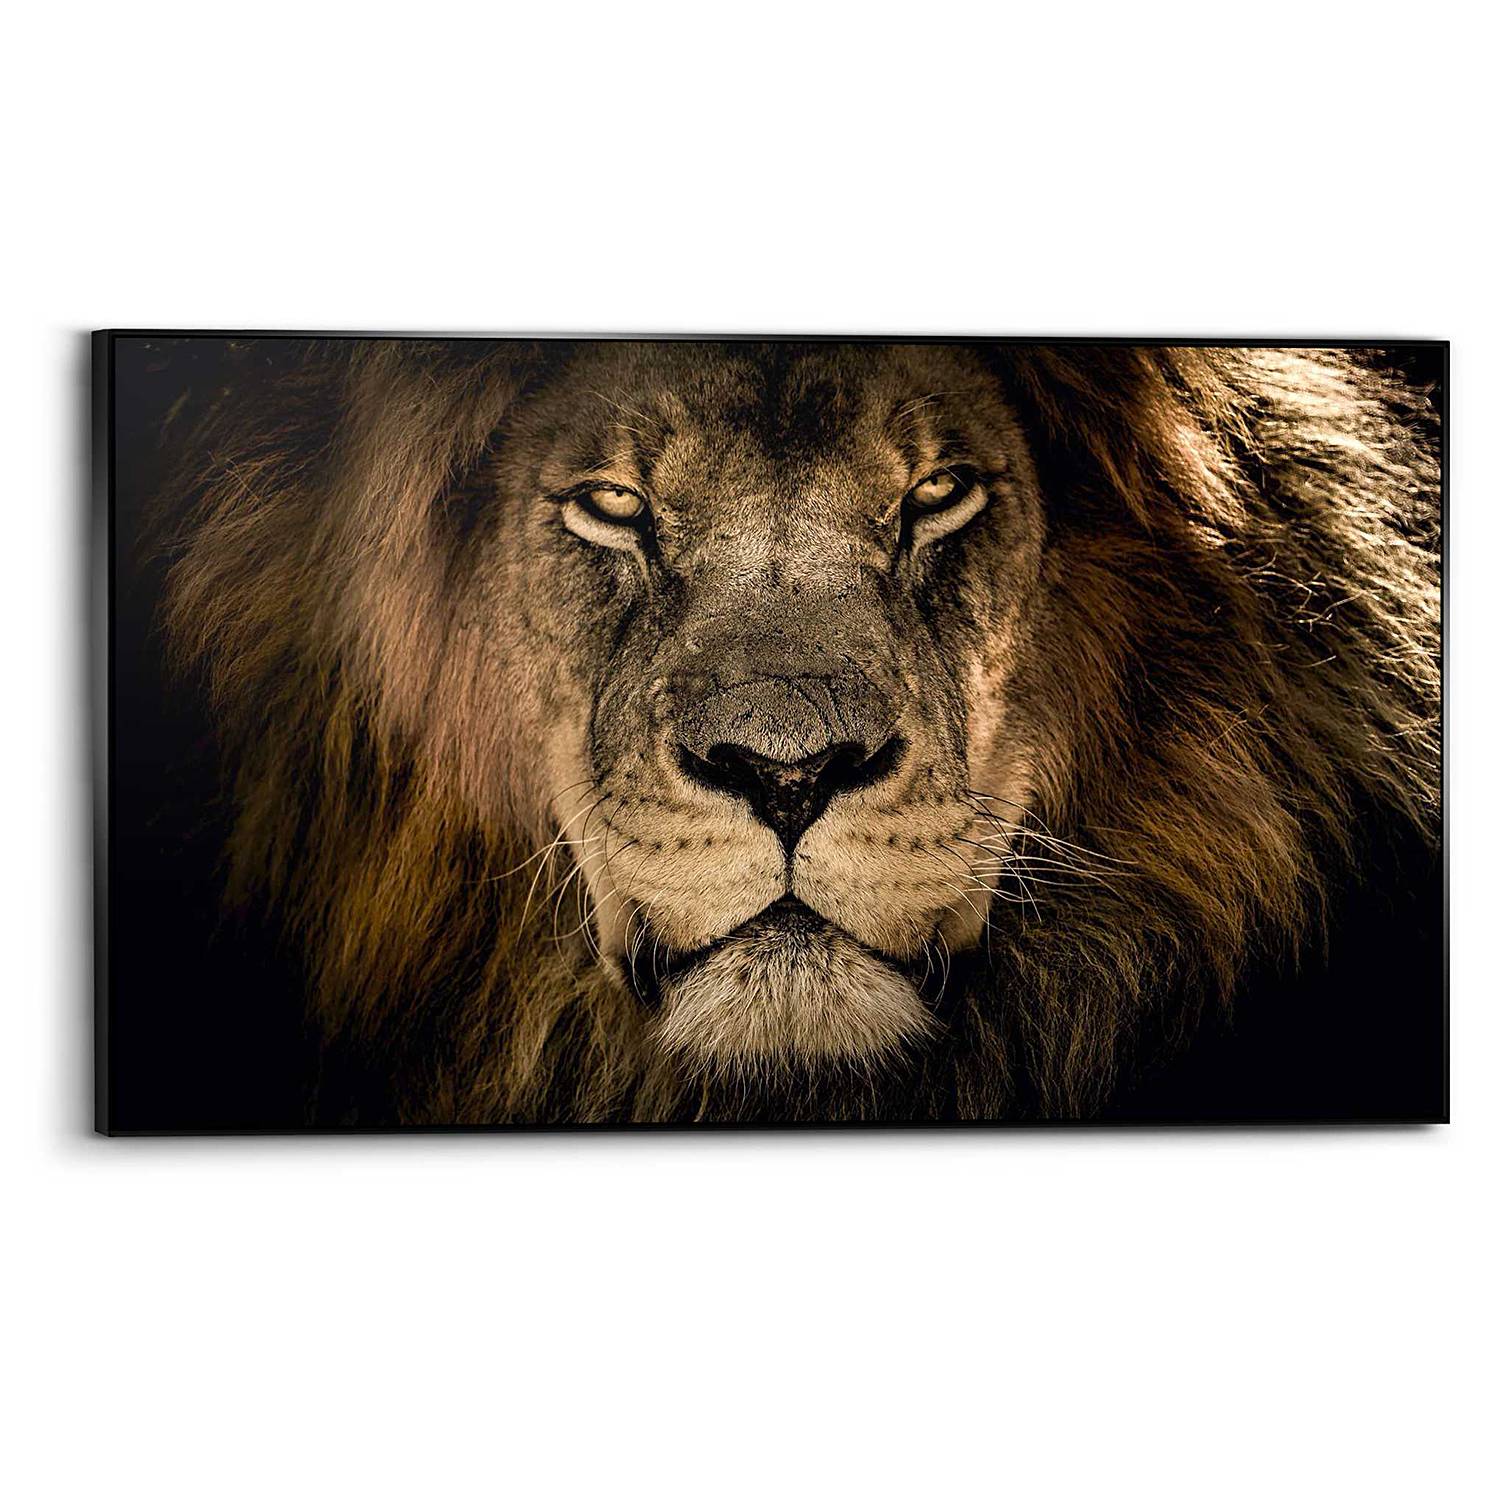 Wandbild Löwe kaufen | home24